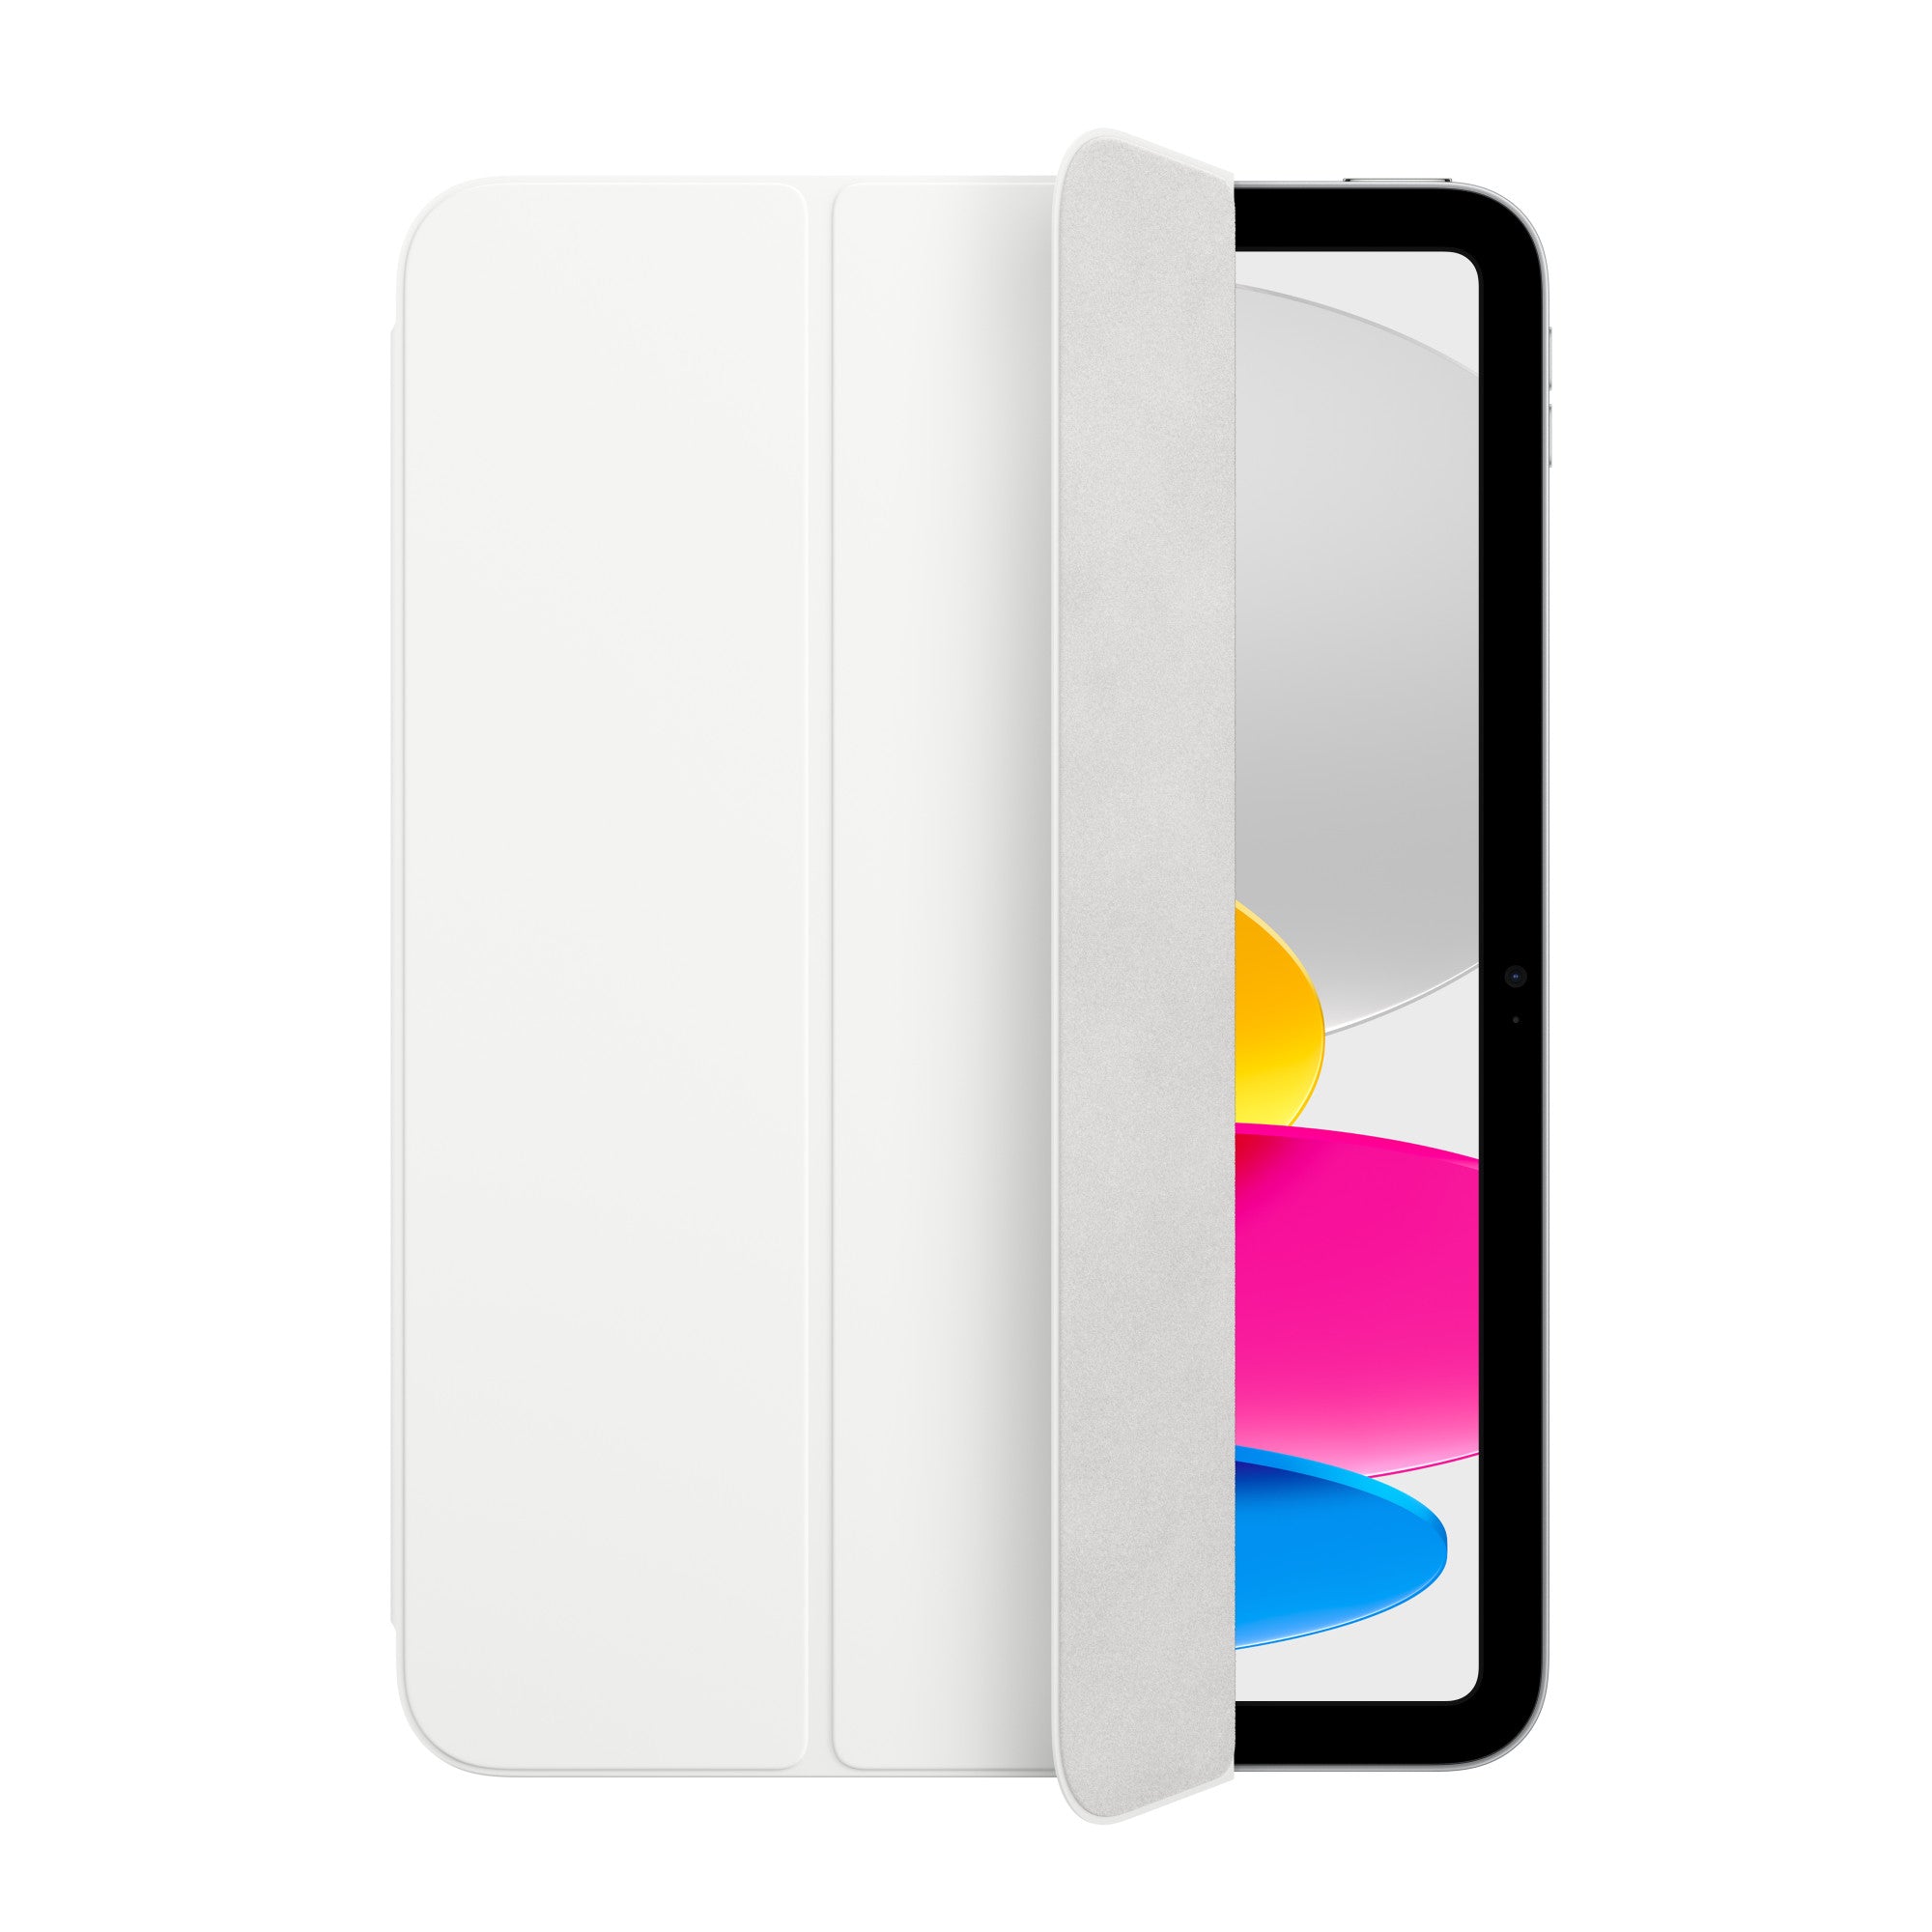 iPad Pro 12.9 Smart Folio White White New - Sealed